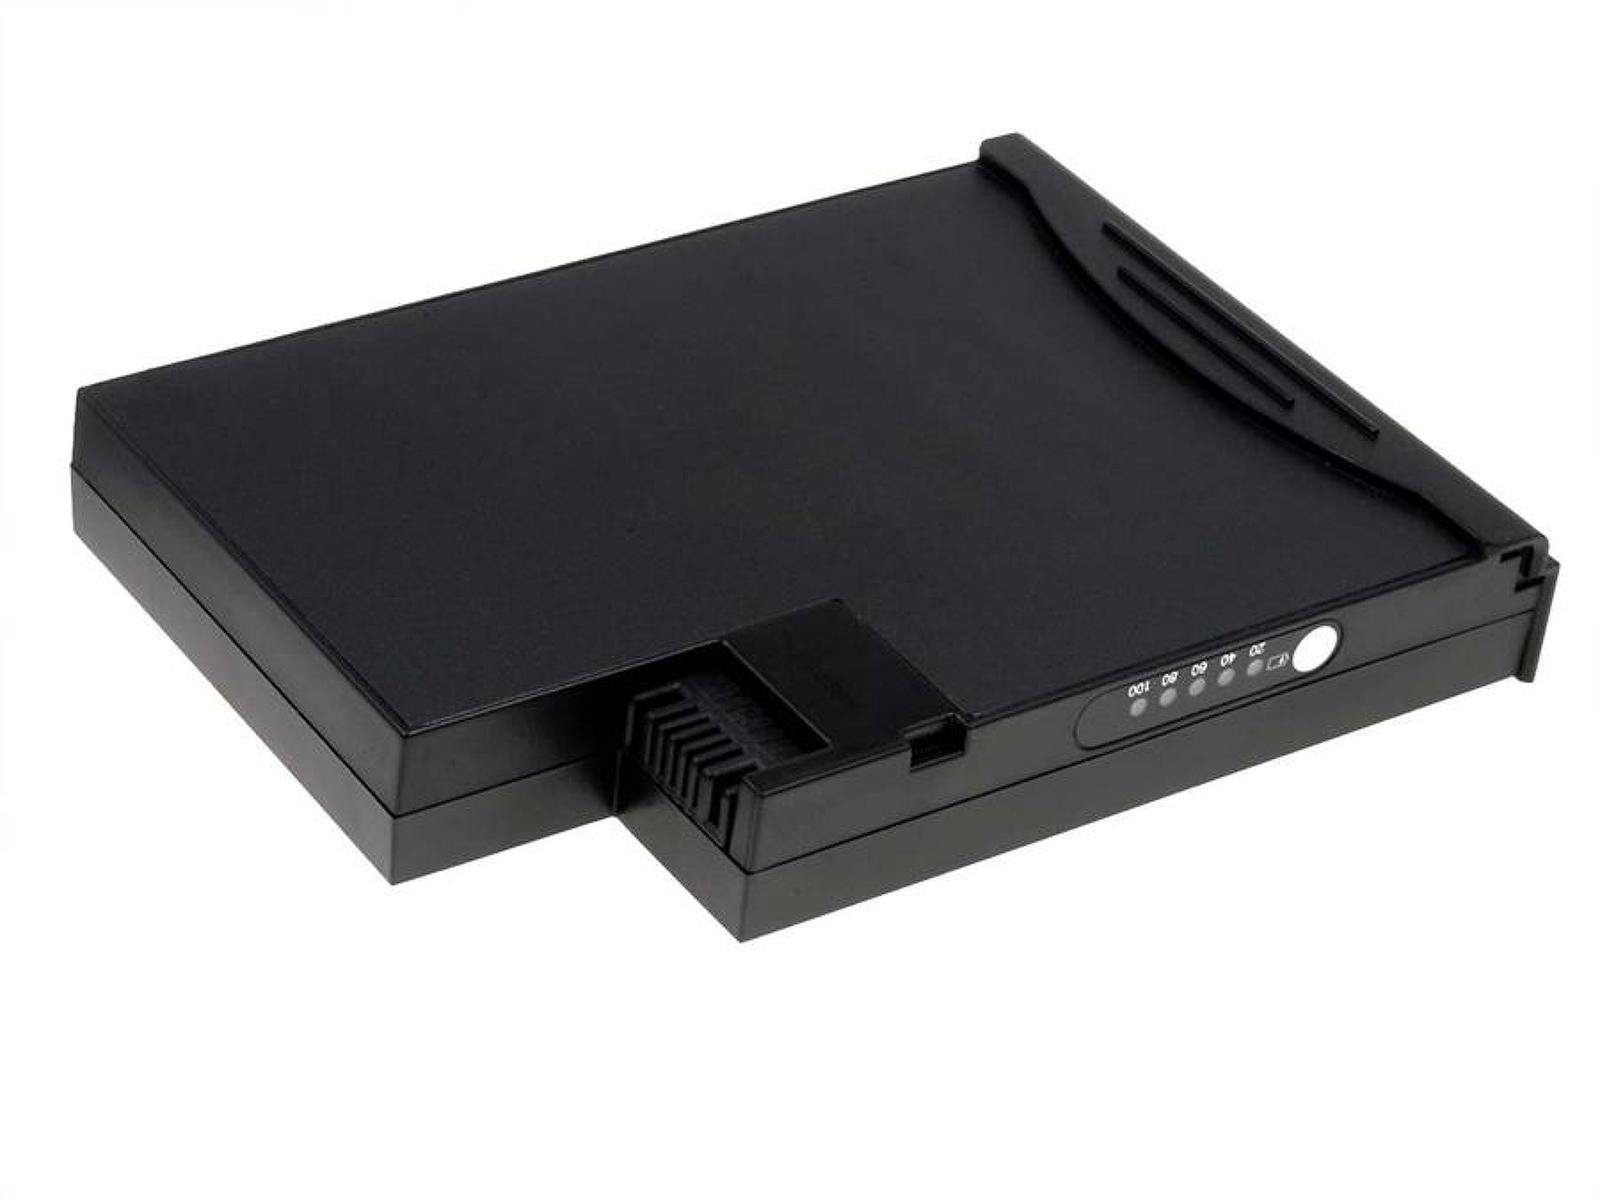 Powery Akku für Maxdata Pro 6000X Laptop-Akku 4400 mAh (14.8 V)